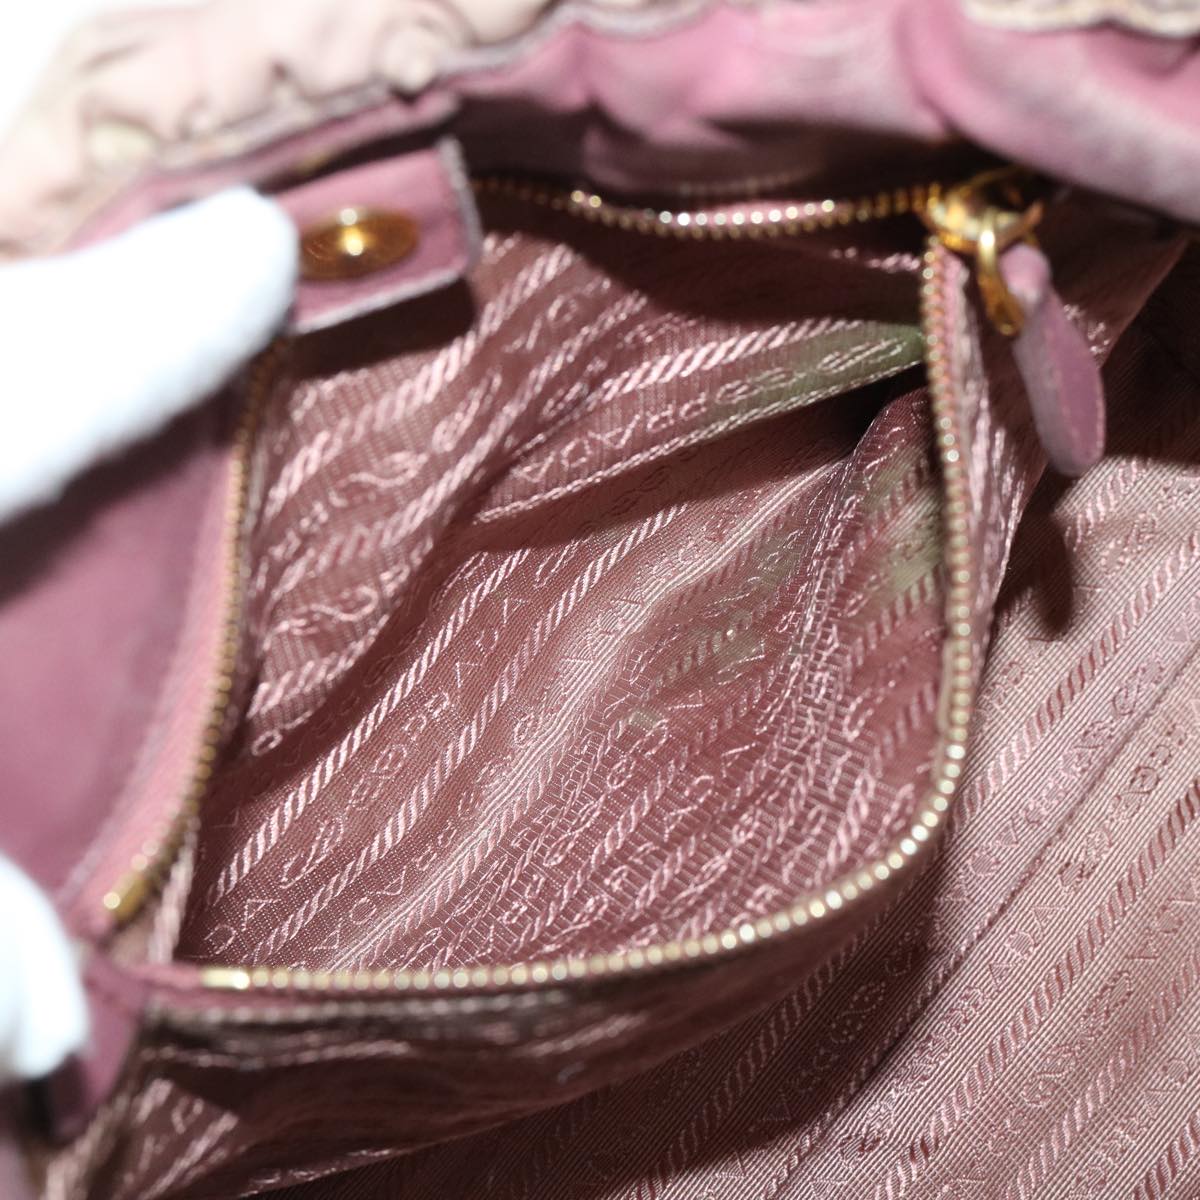 PRADA Hand Bag Nylon Pink Auth bs7913